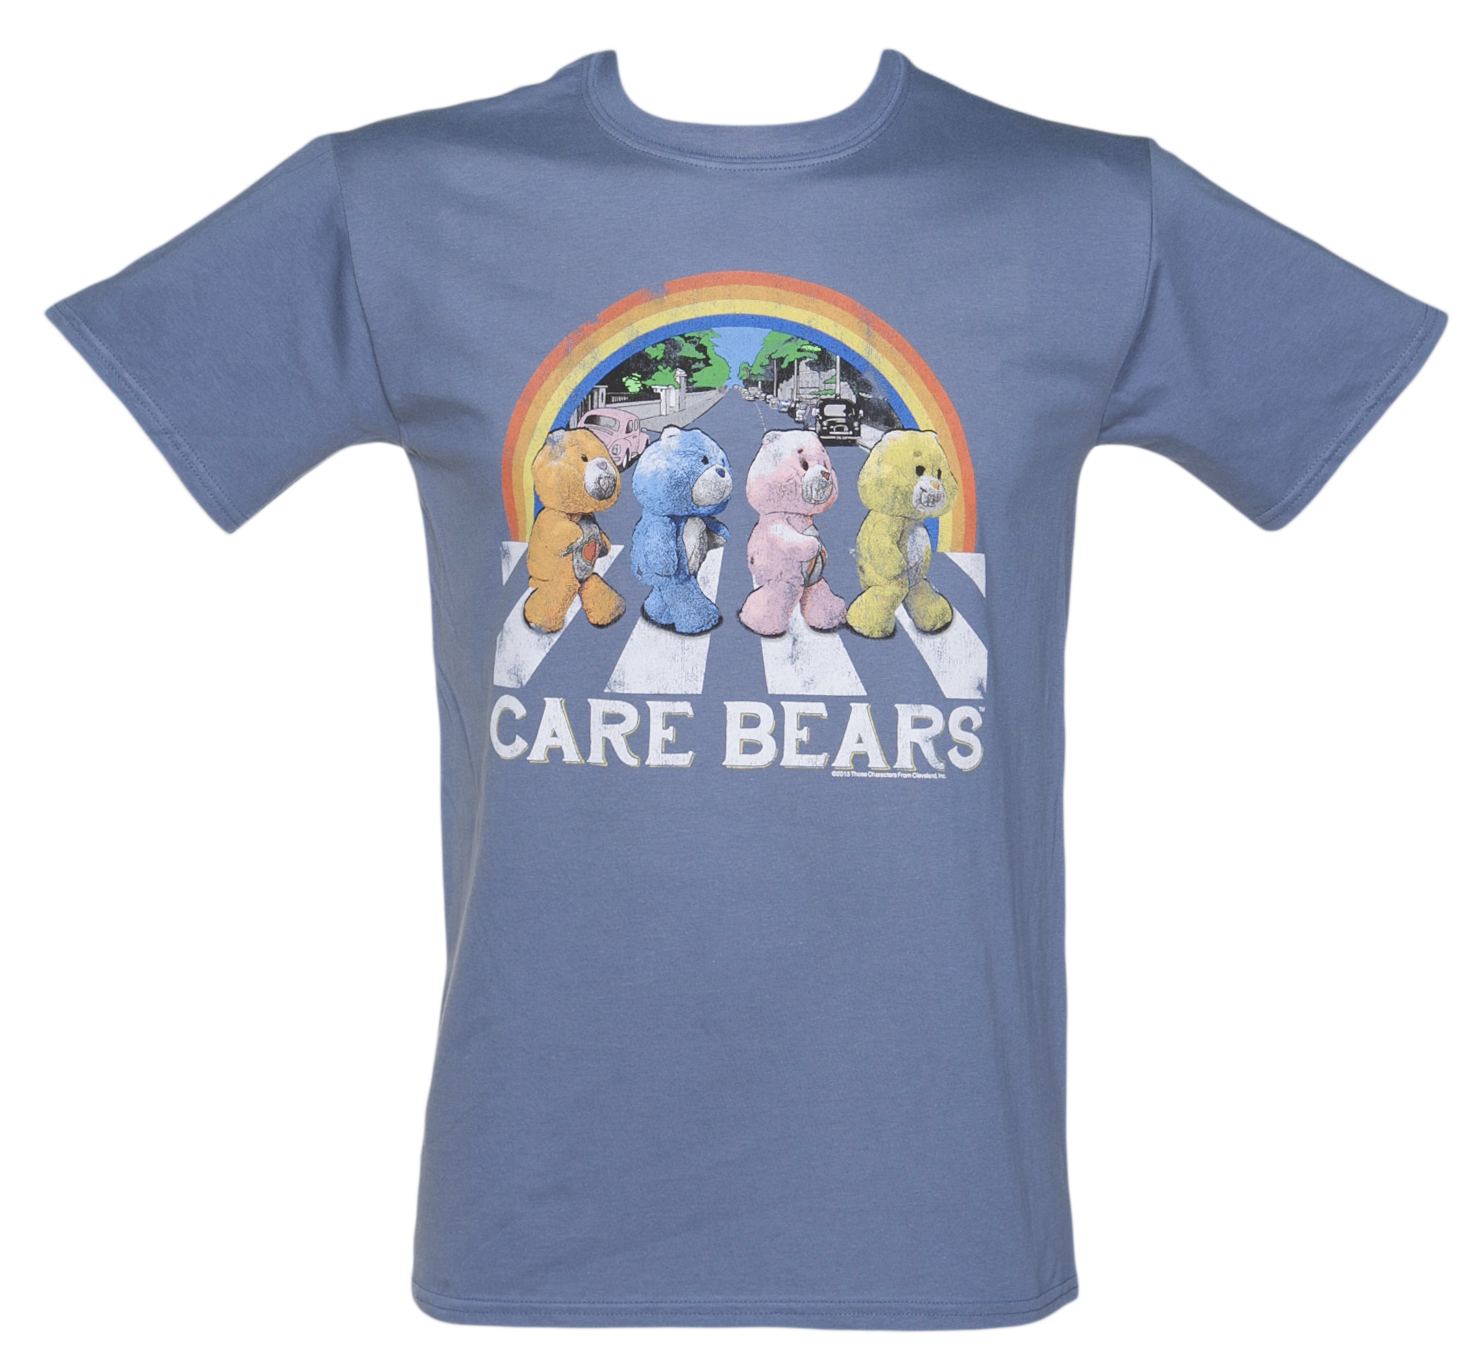 Mens Care Bears Abbey Road T-Shirt